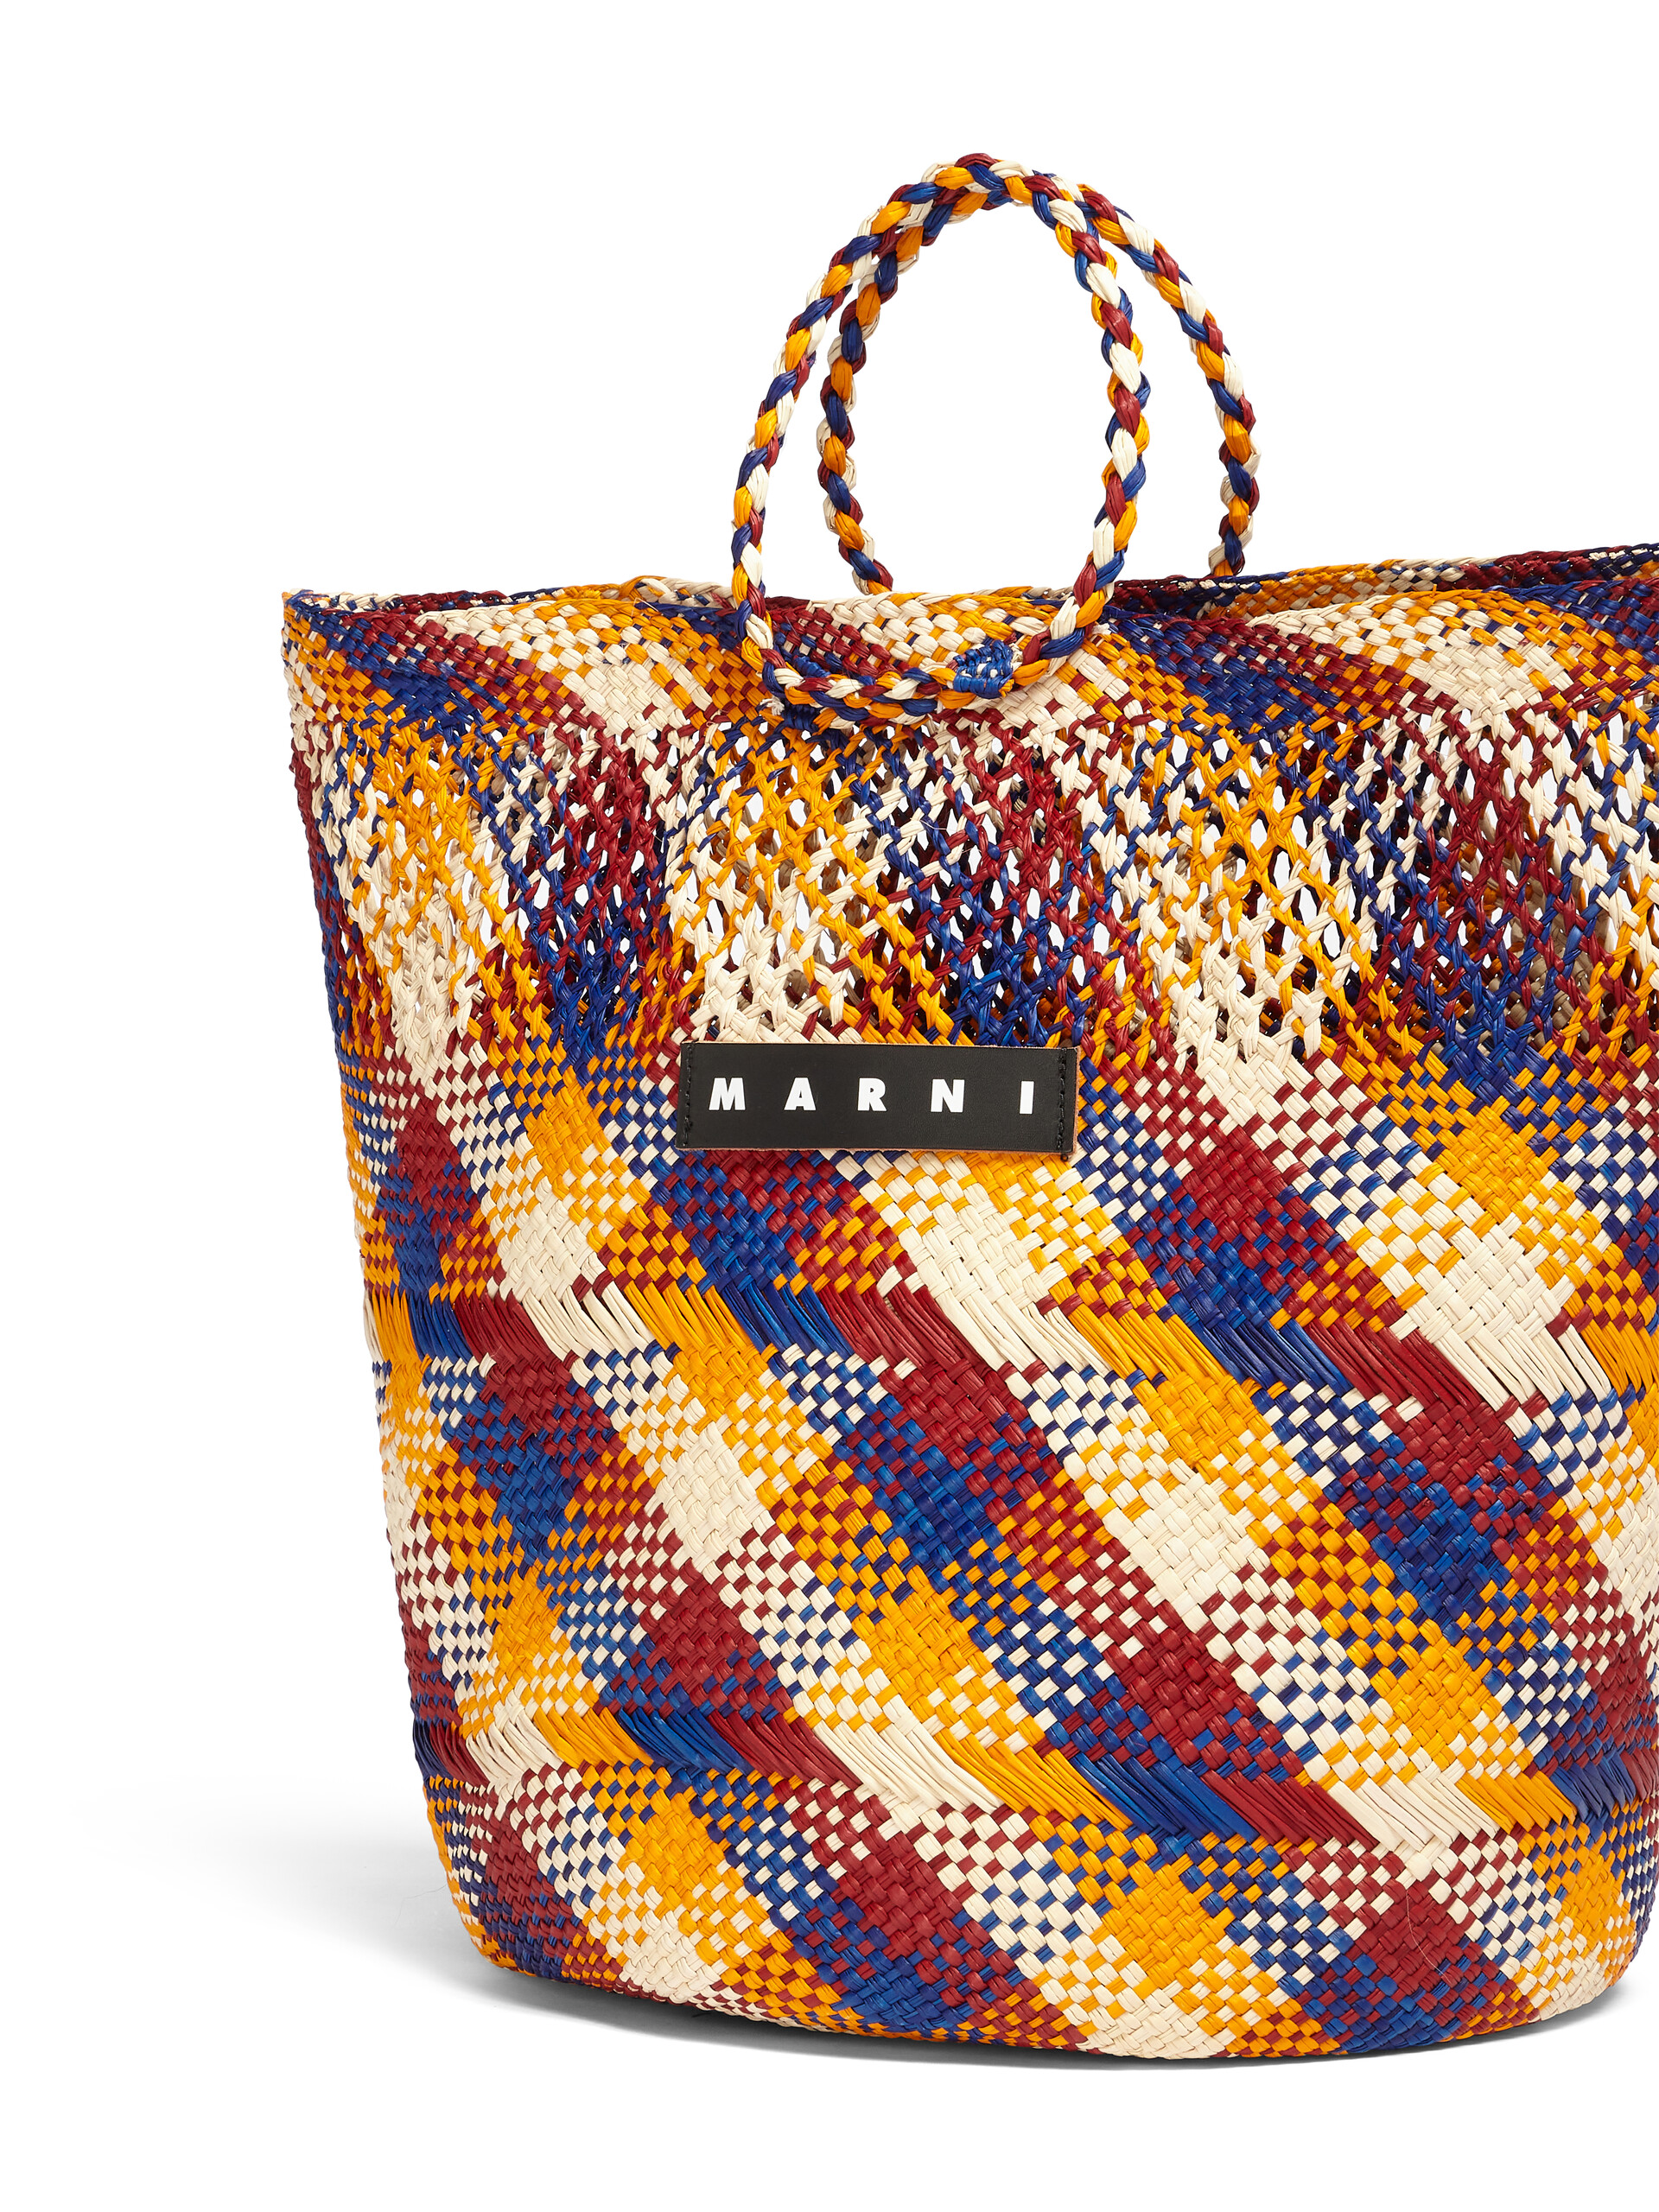 MARNI MARKET TAPIS bag in multicolor natural fiber - Shopping Bags - Image 4